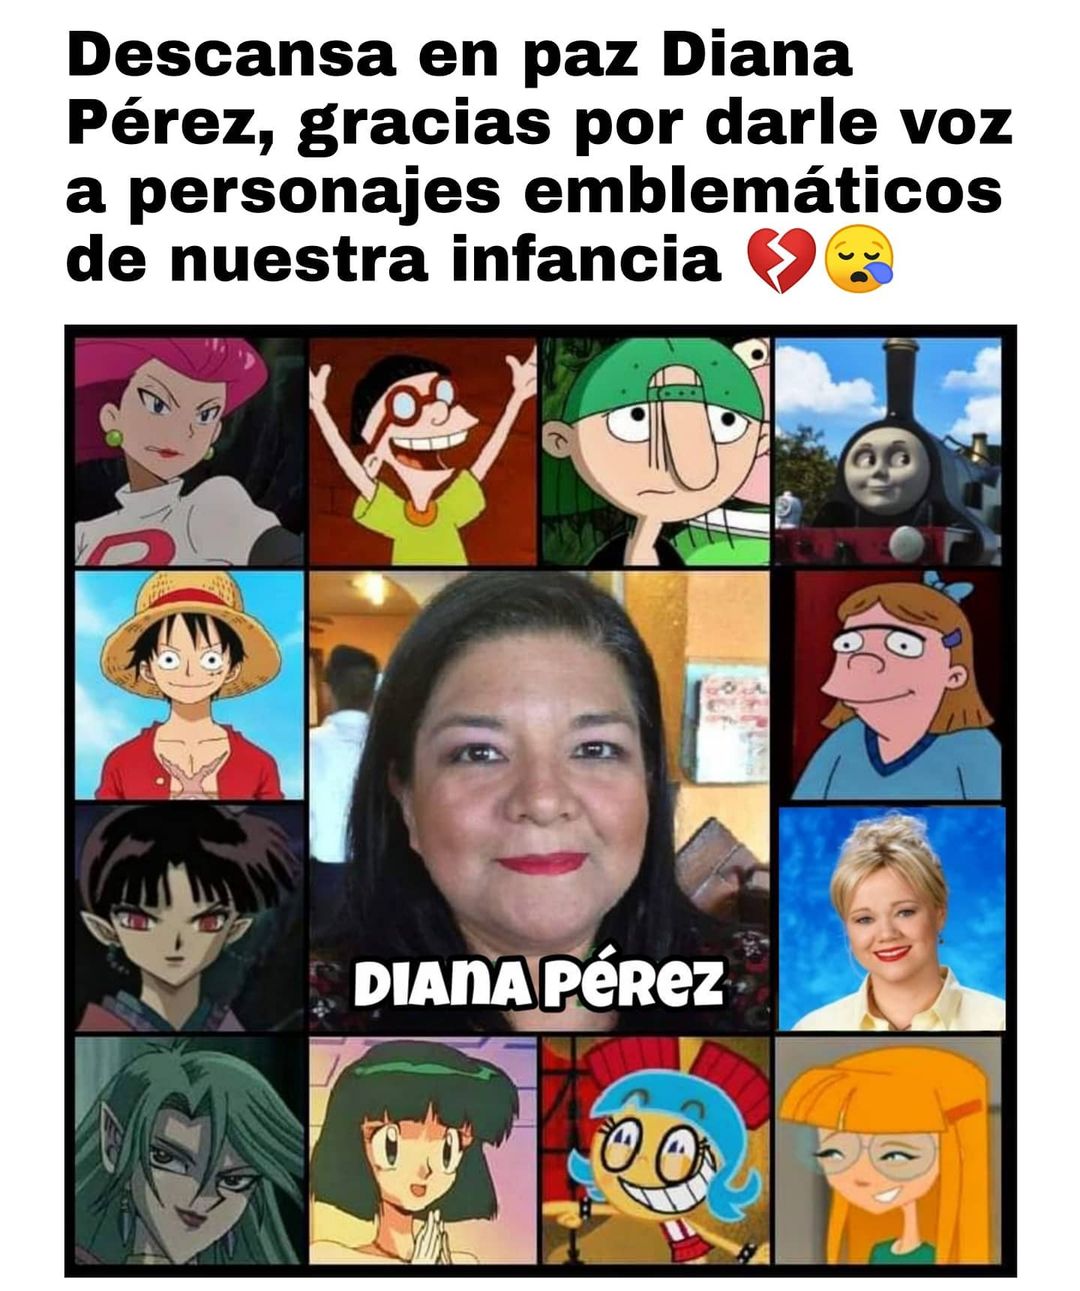 Descansa en paz Diana Pérez, gracias por darle voz a personajes emblemáticos de nuestra infancia.